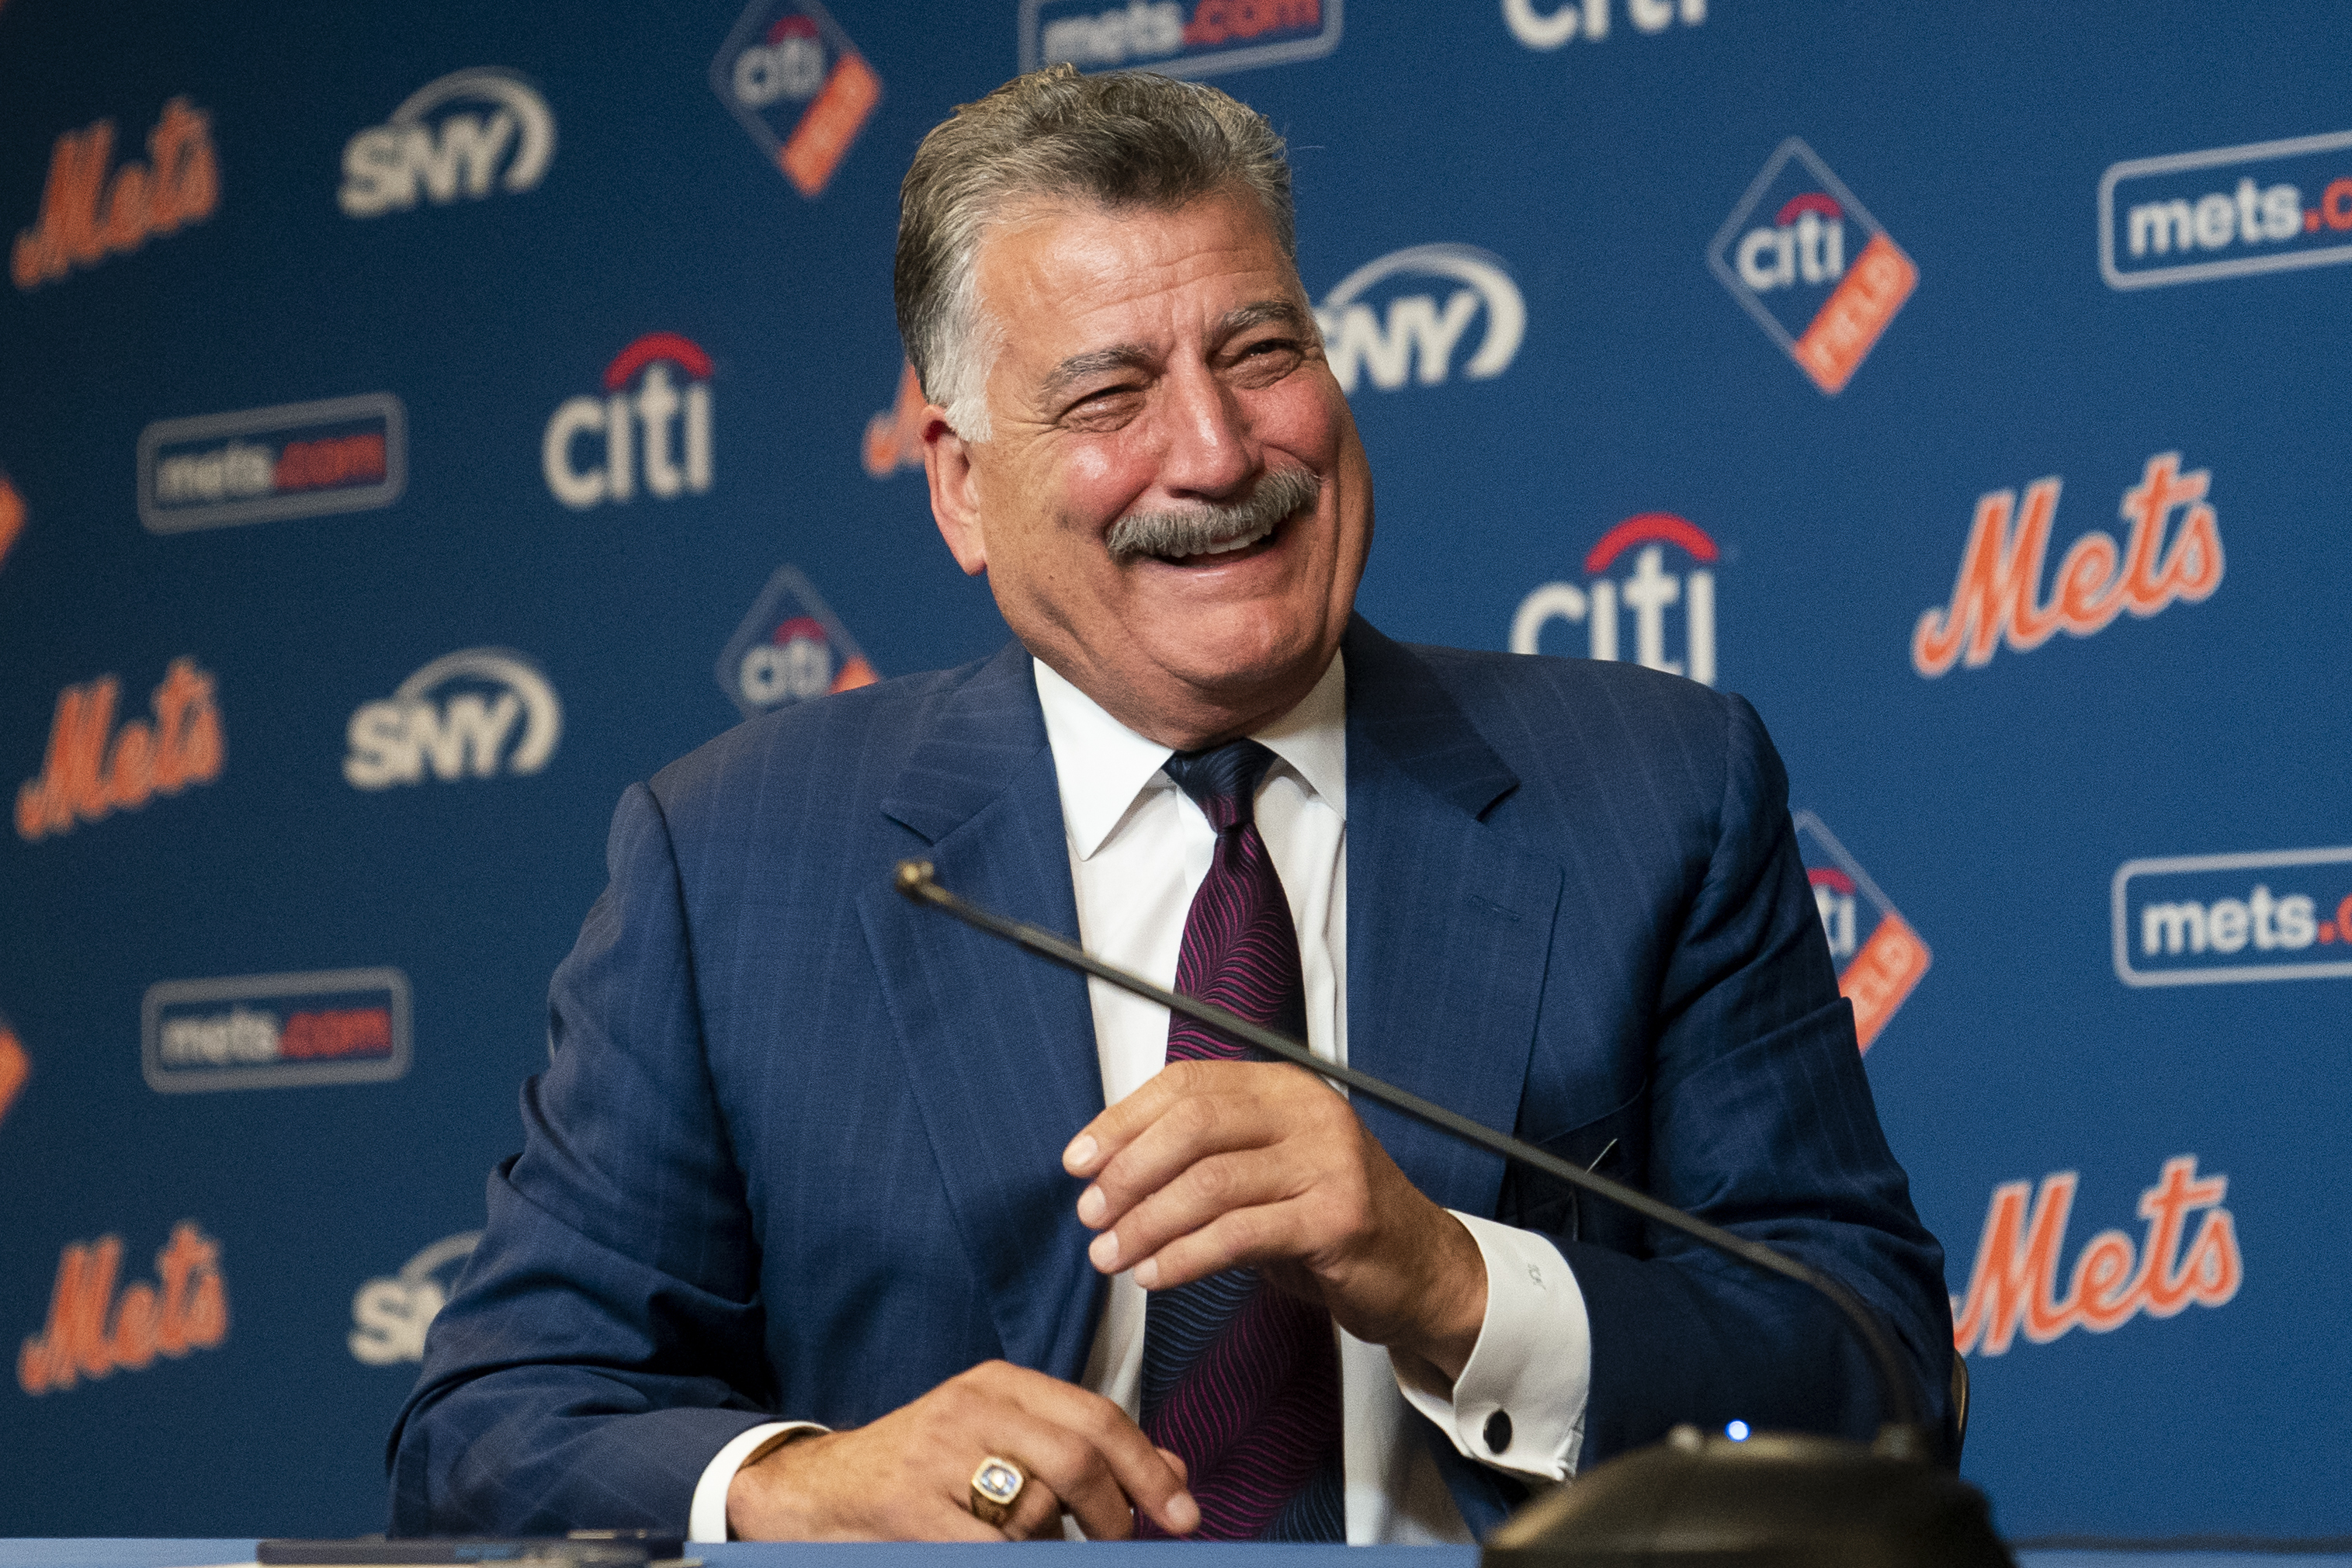 Mets retire No. 17 in pre-game ceremony honoring Keith Hernandez - CBS New  York